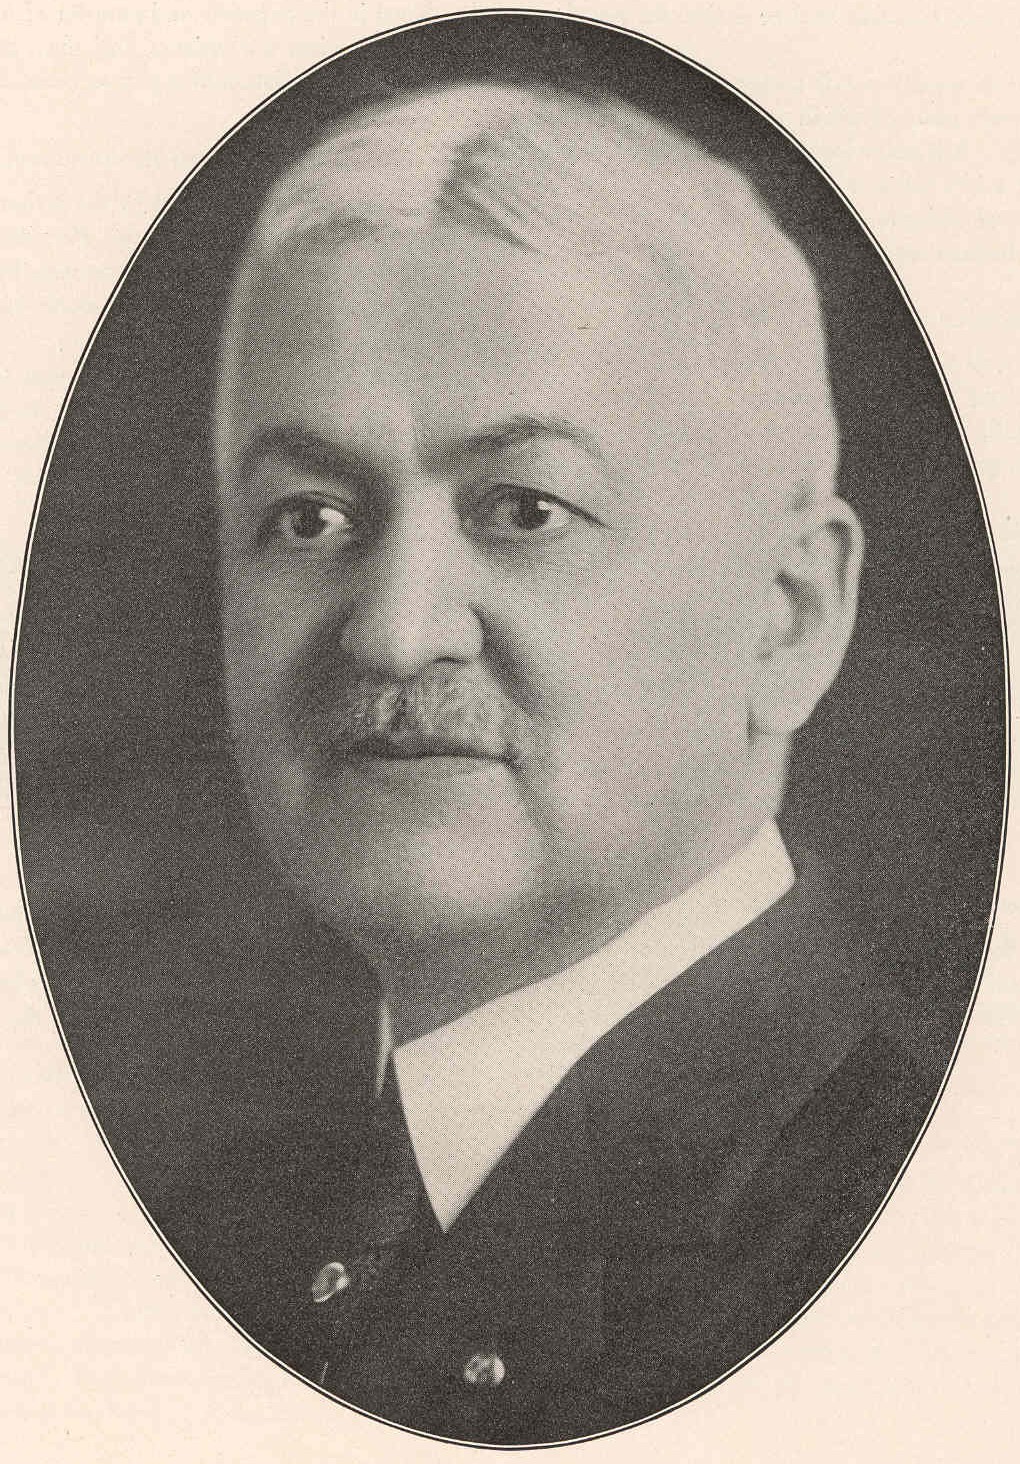 W.A.H. Reider